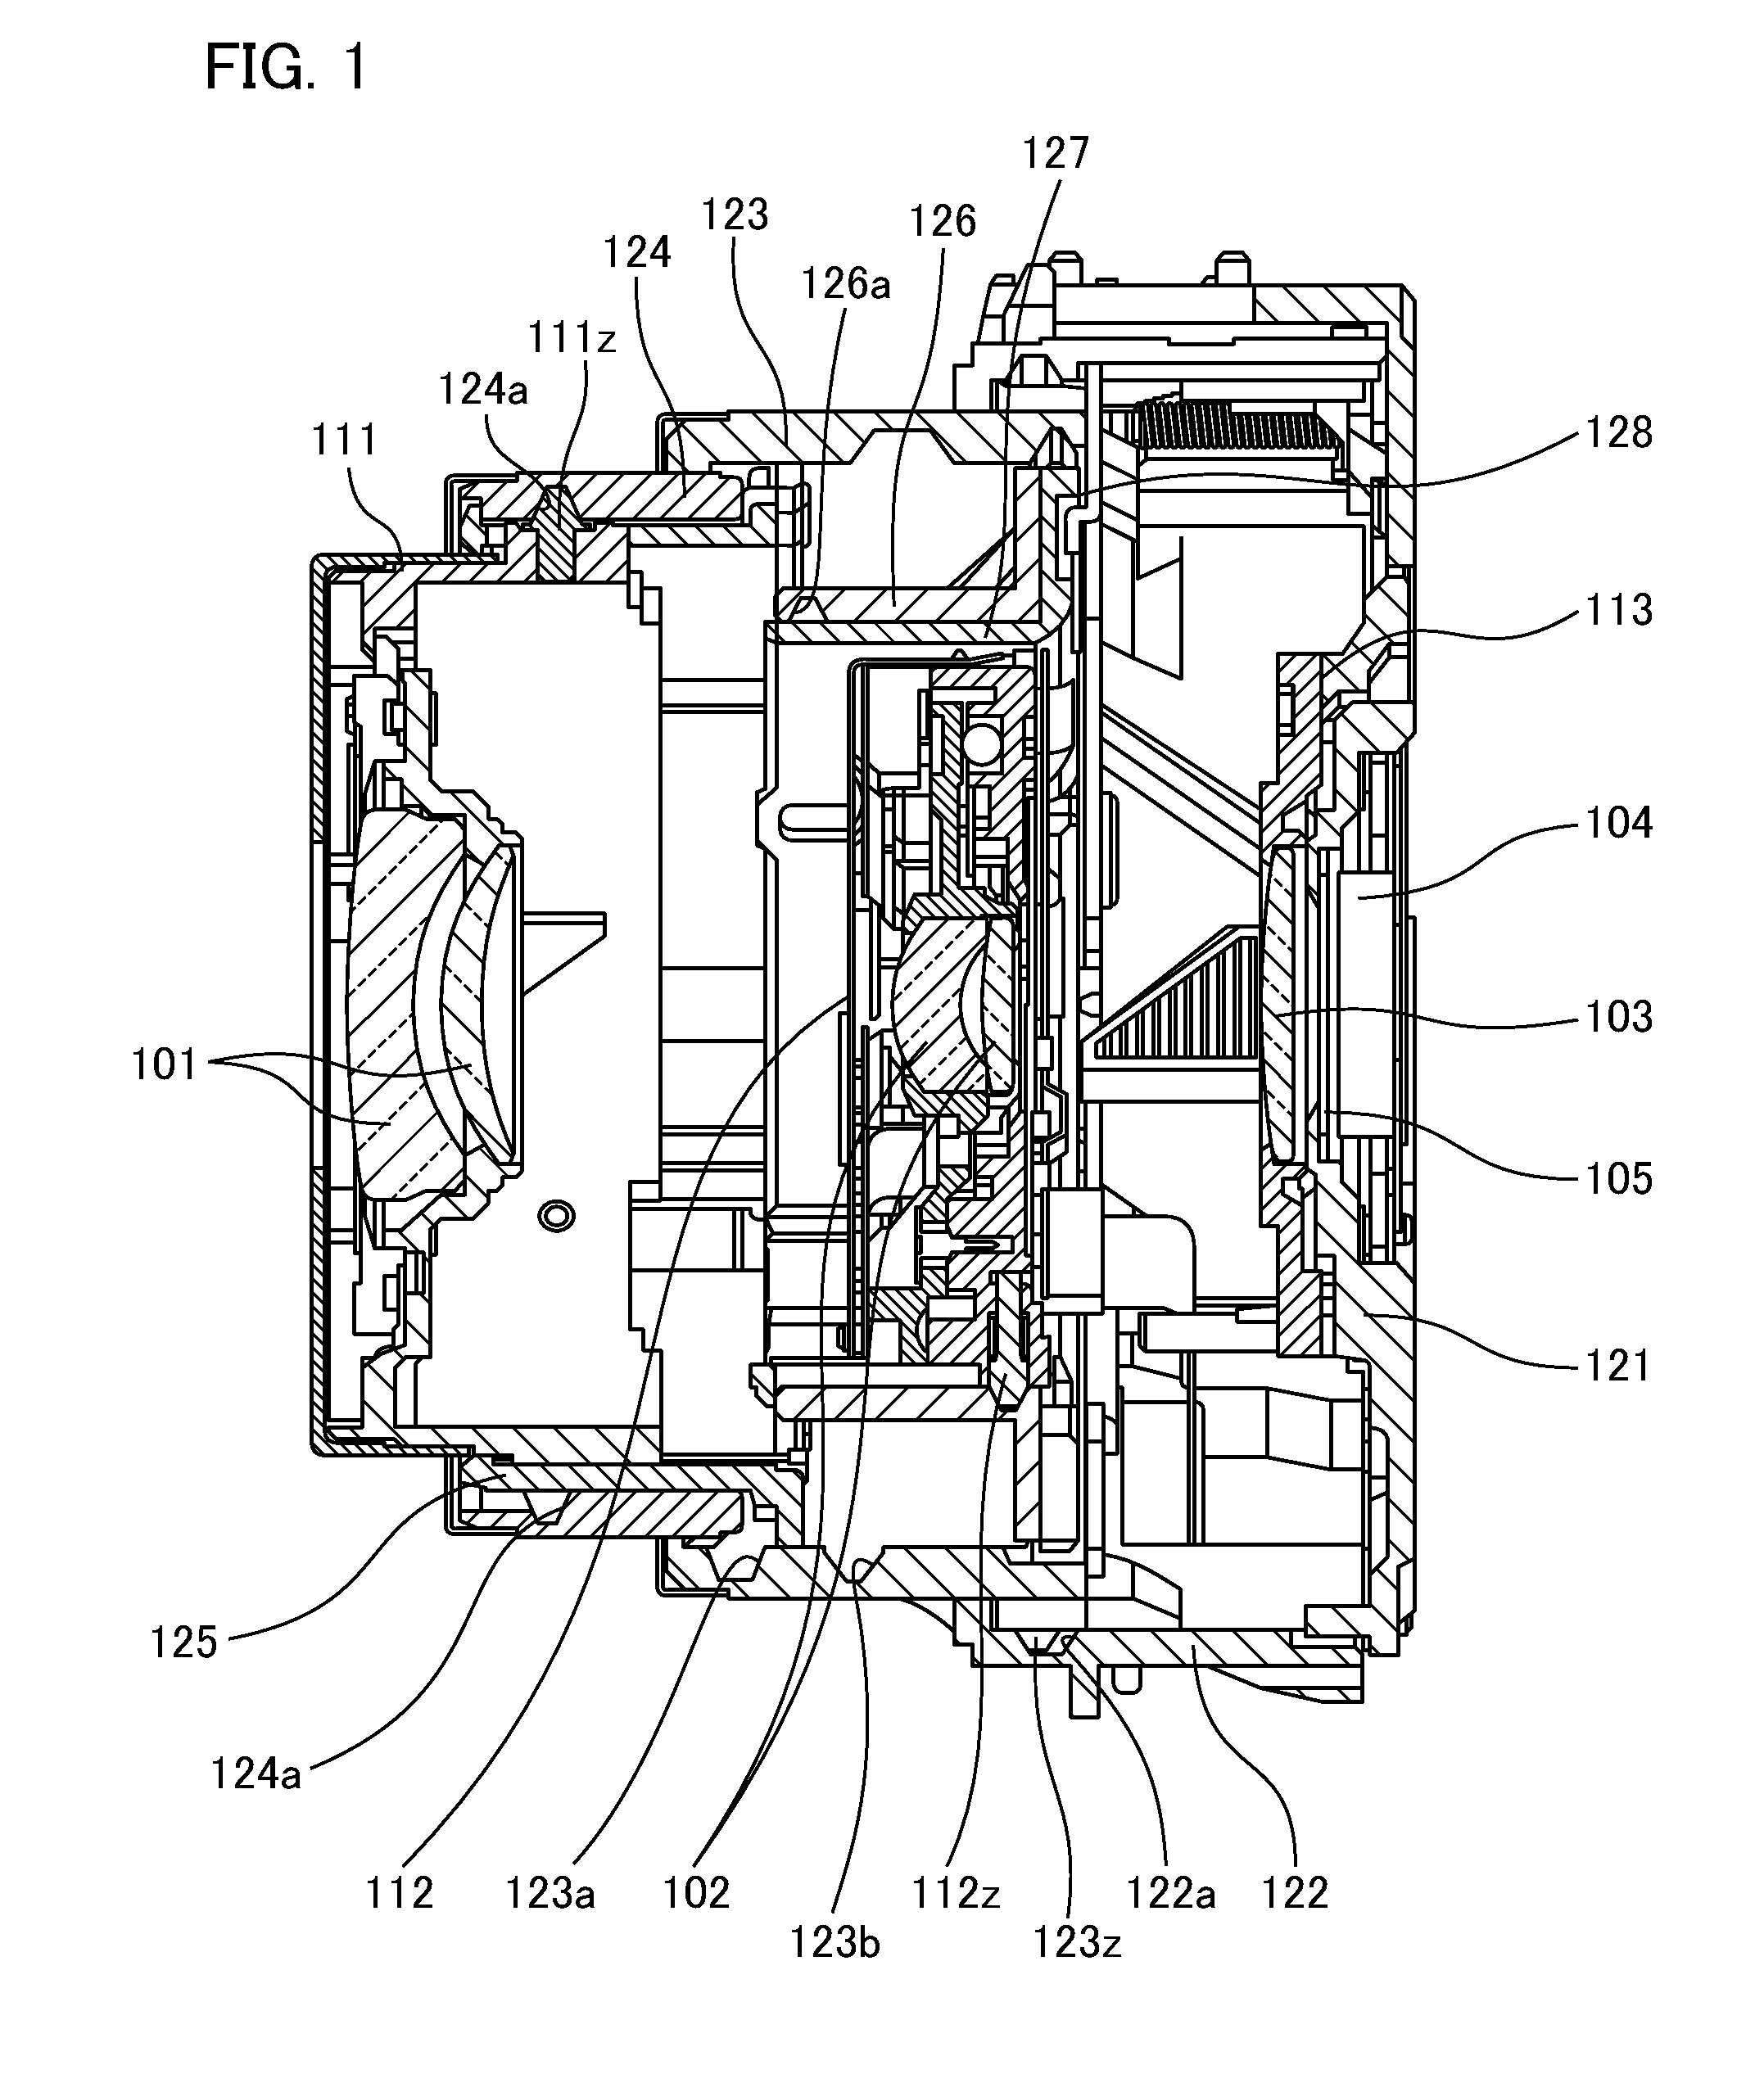 Lens barrel and imaging apparatus